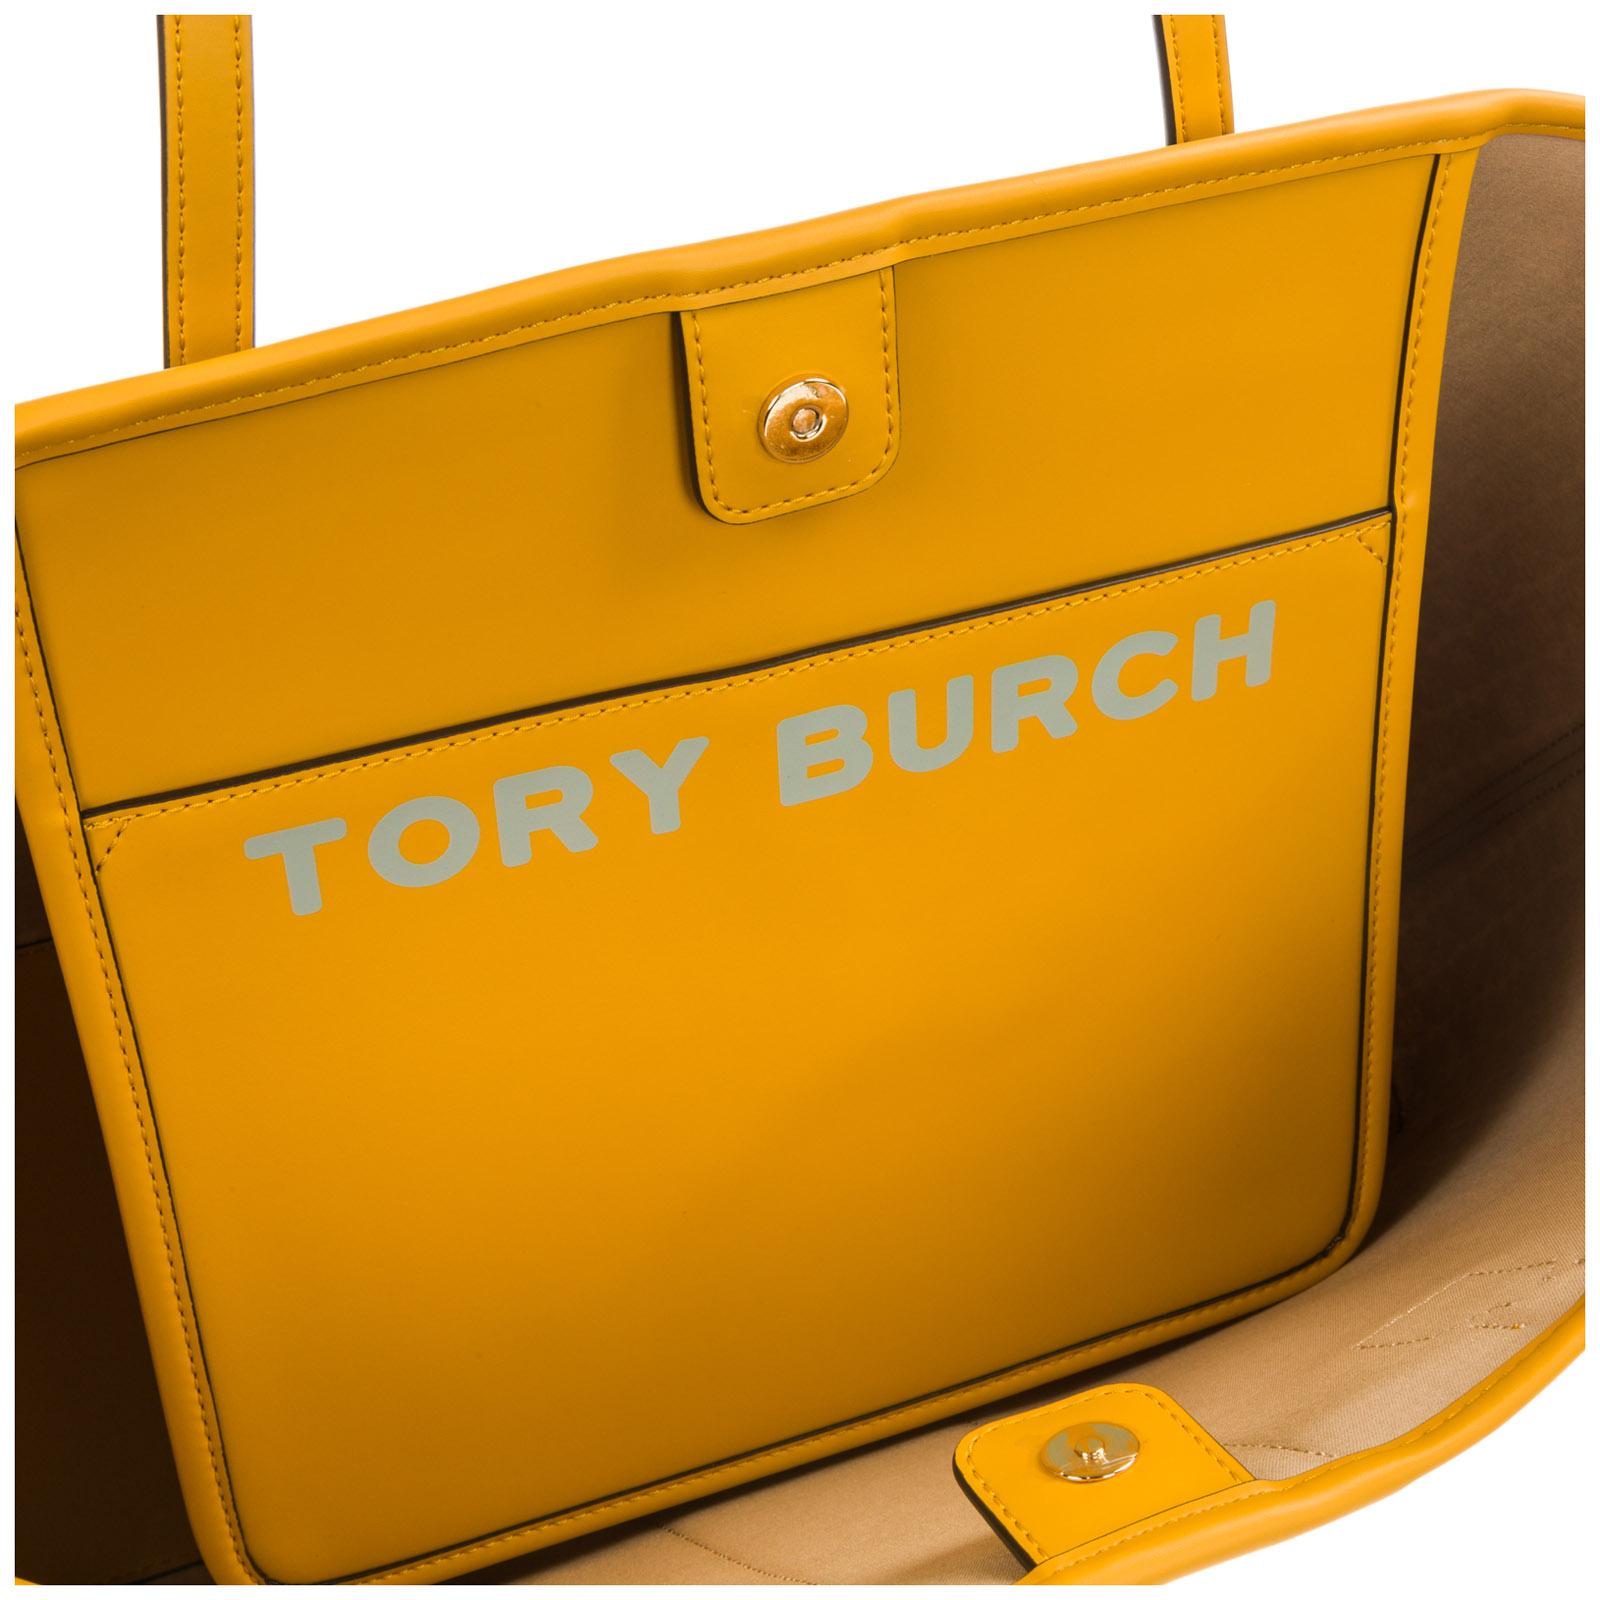 Tory Burch Gemini Link Tote Yellow leather trim rare bag shopping strap  cracking